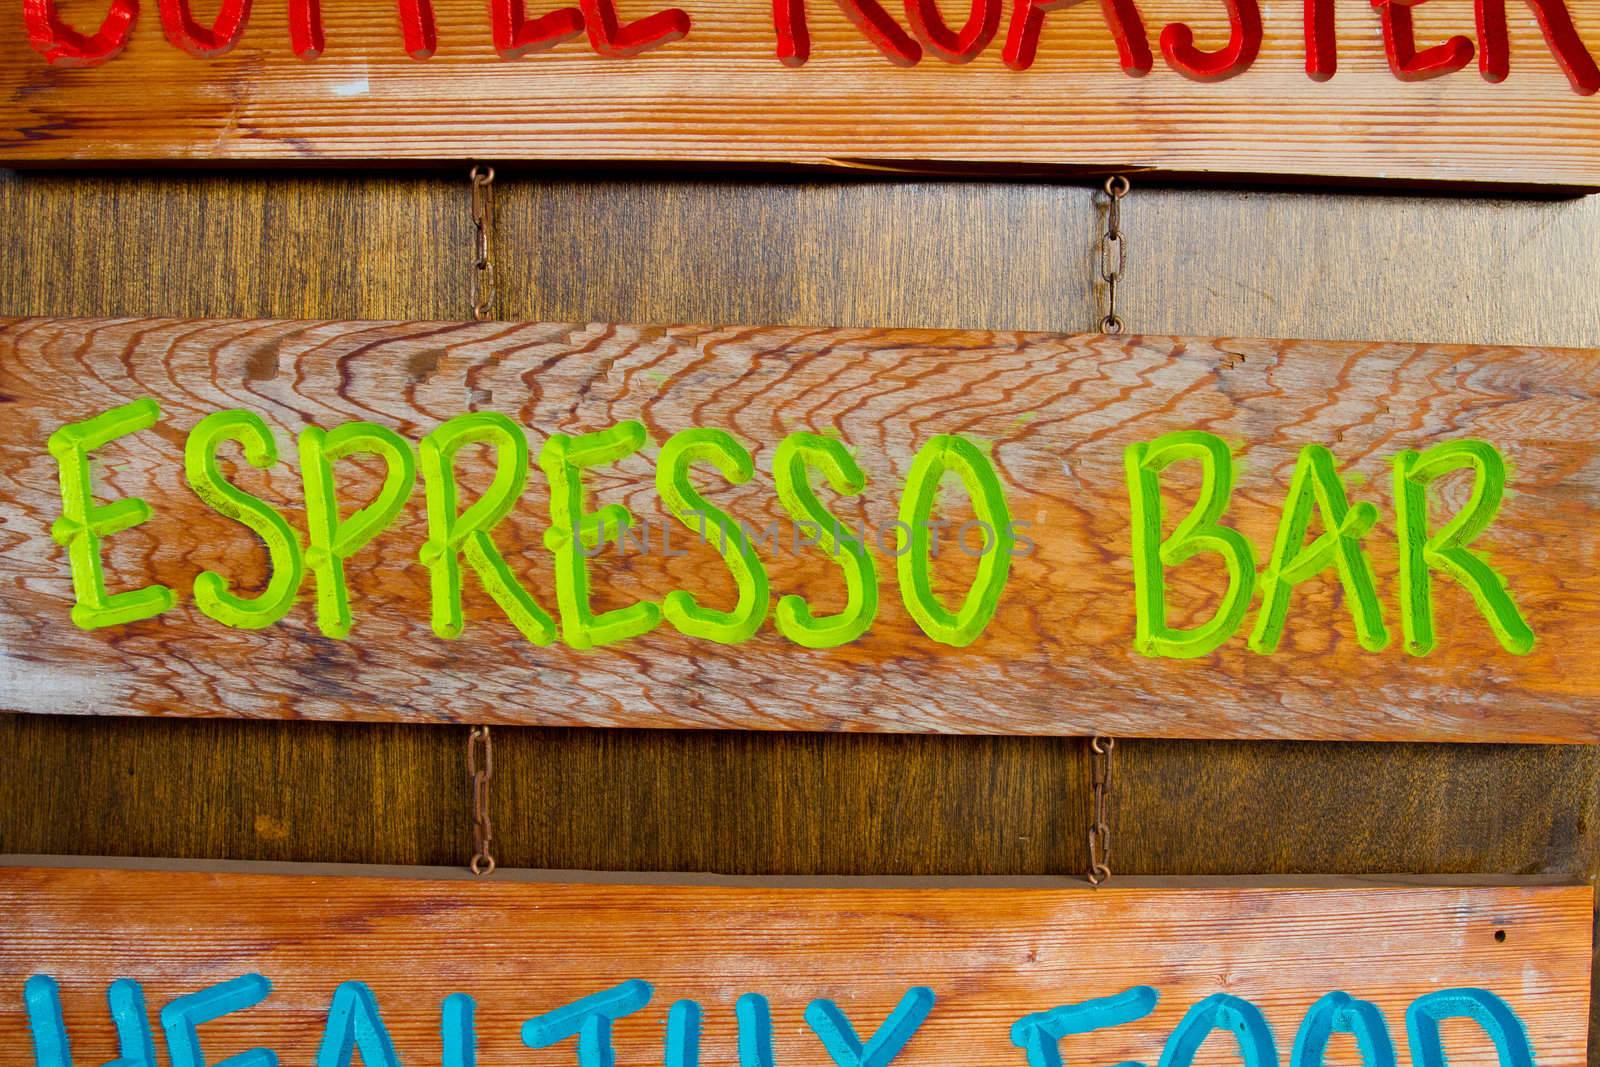 Espresso Bar Wood Sign by joshuaraineyphotography